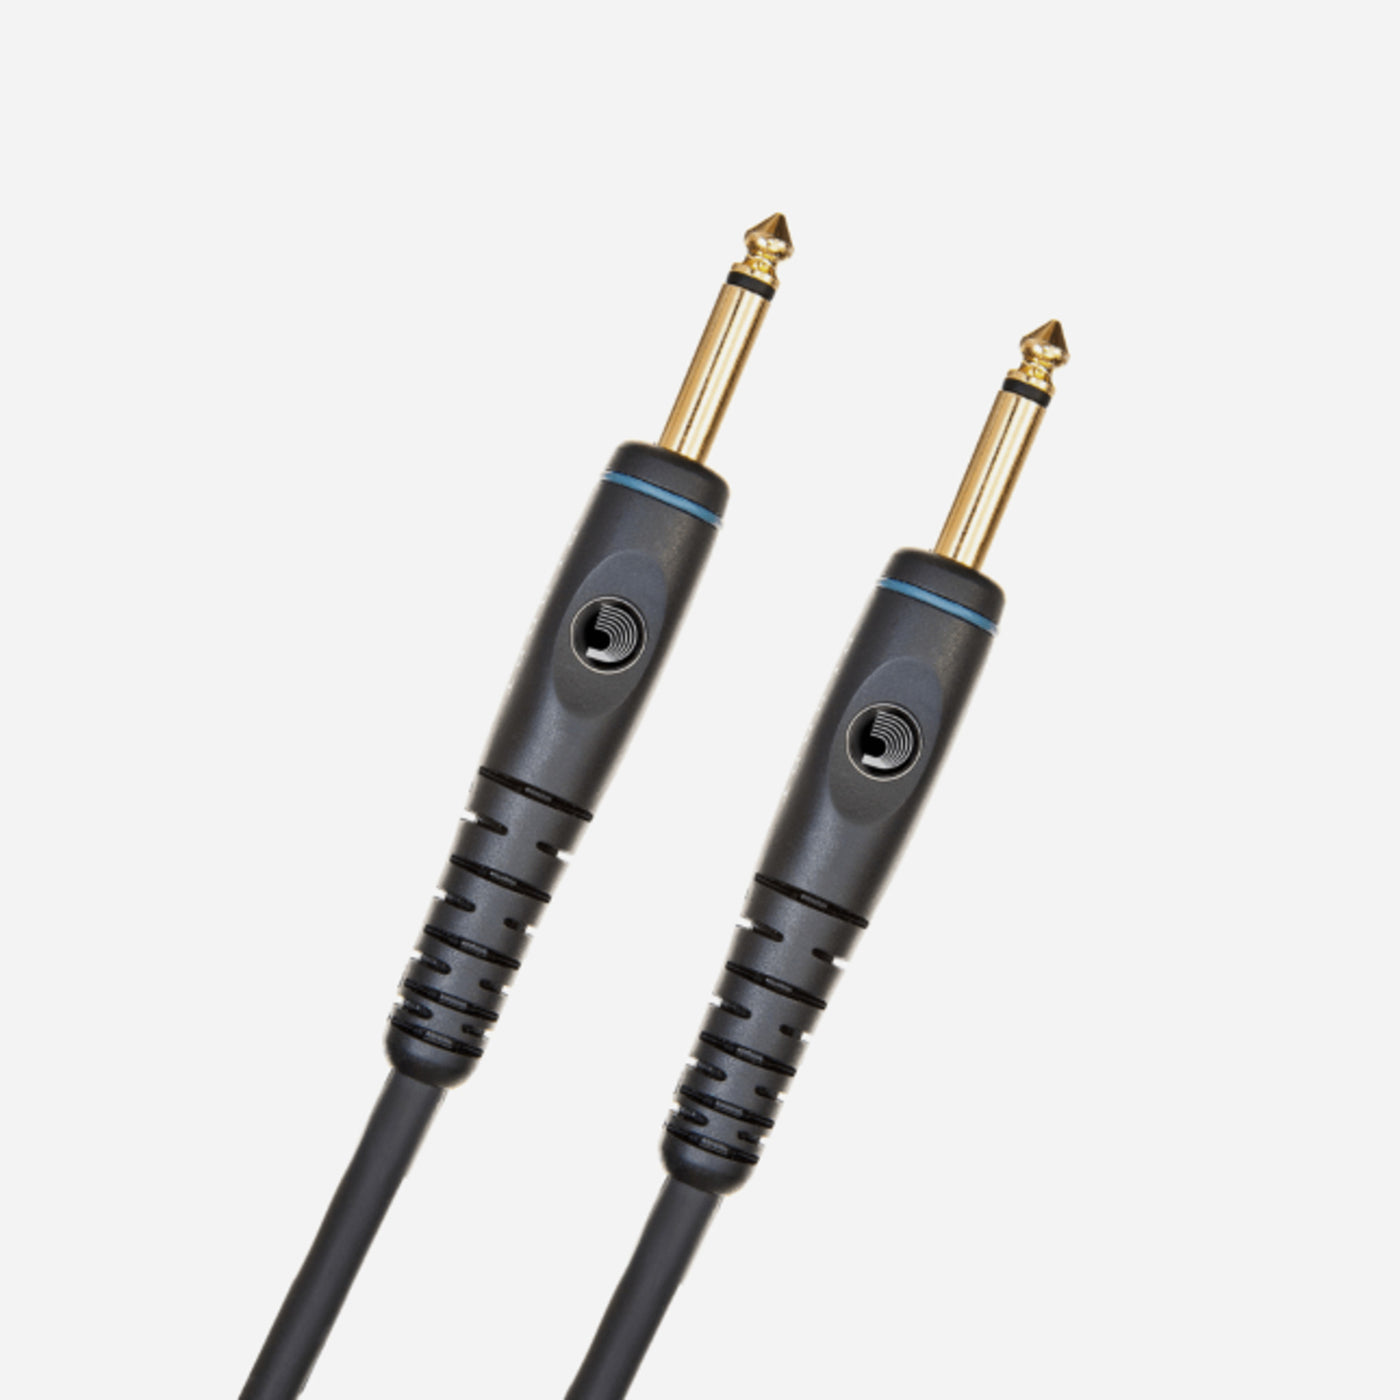 D'Addario Custom Series Instrument Cable, 10 feet (PW-G-10)